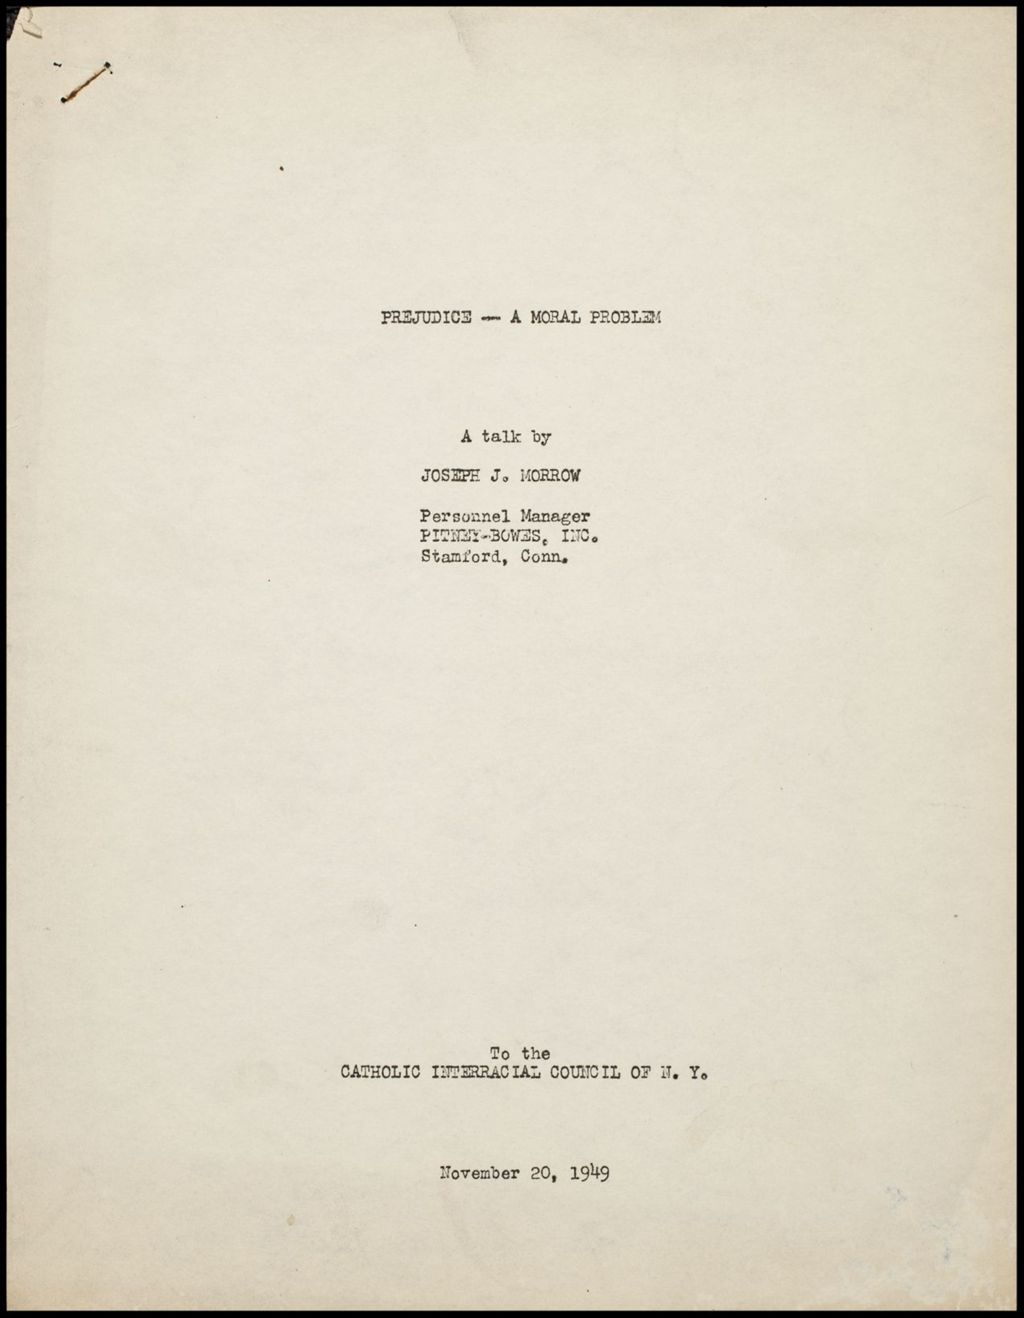 Miniature of Paper on prejudice, 1949 (Folder I-2654)